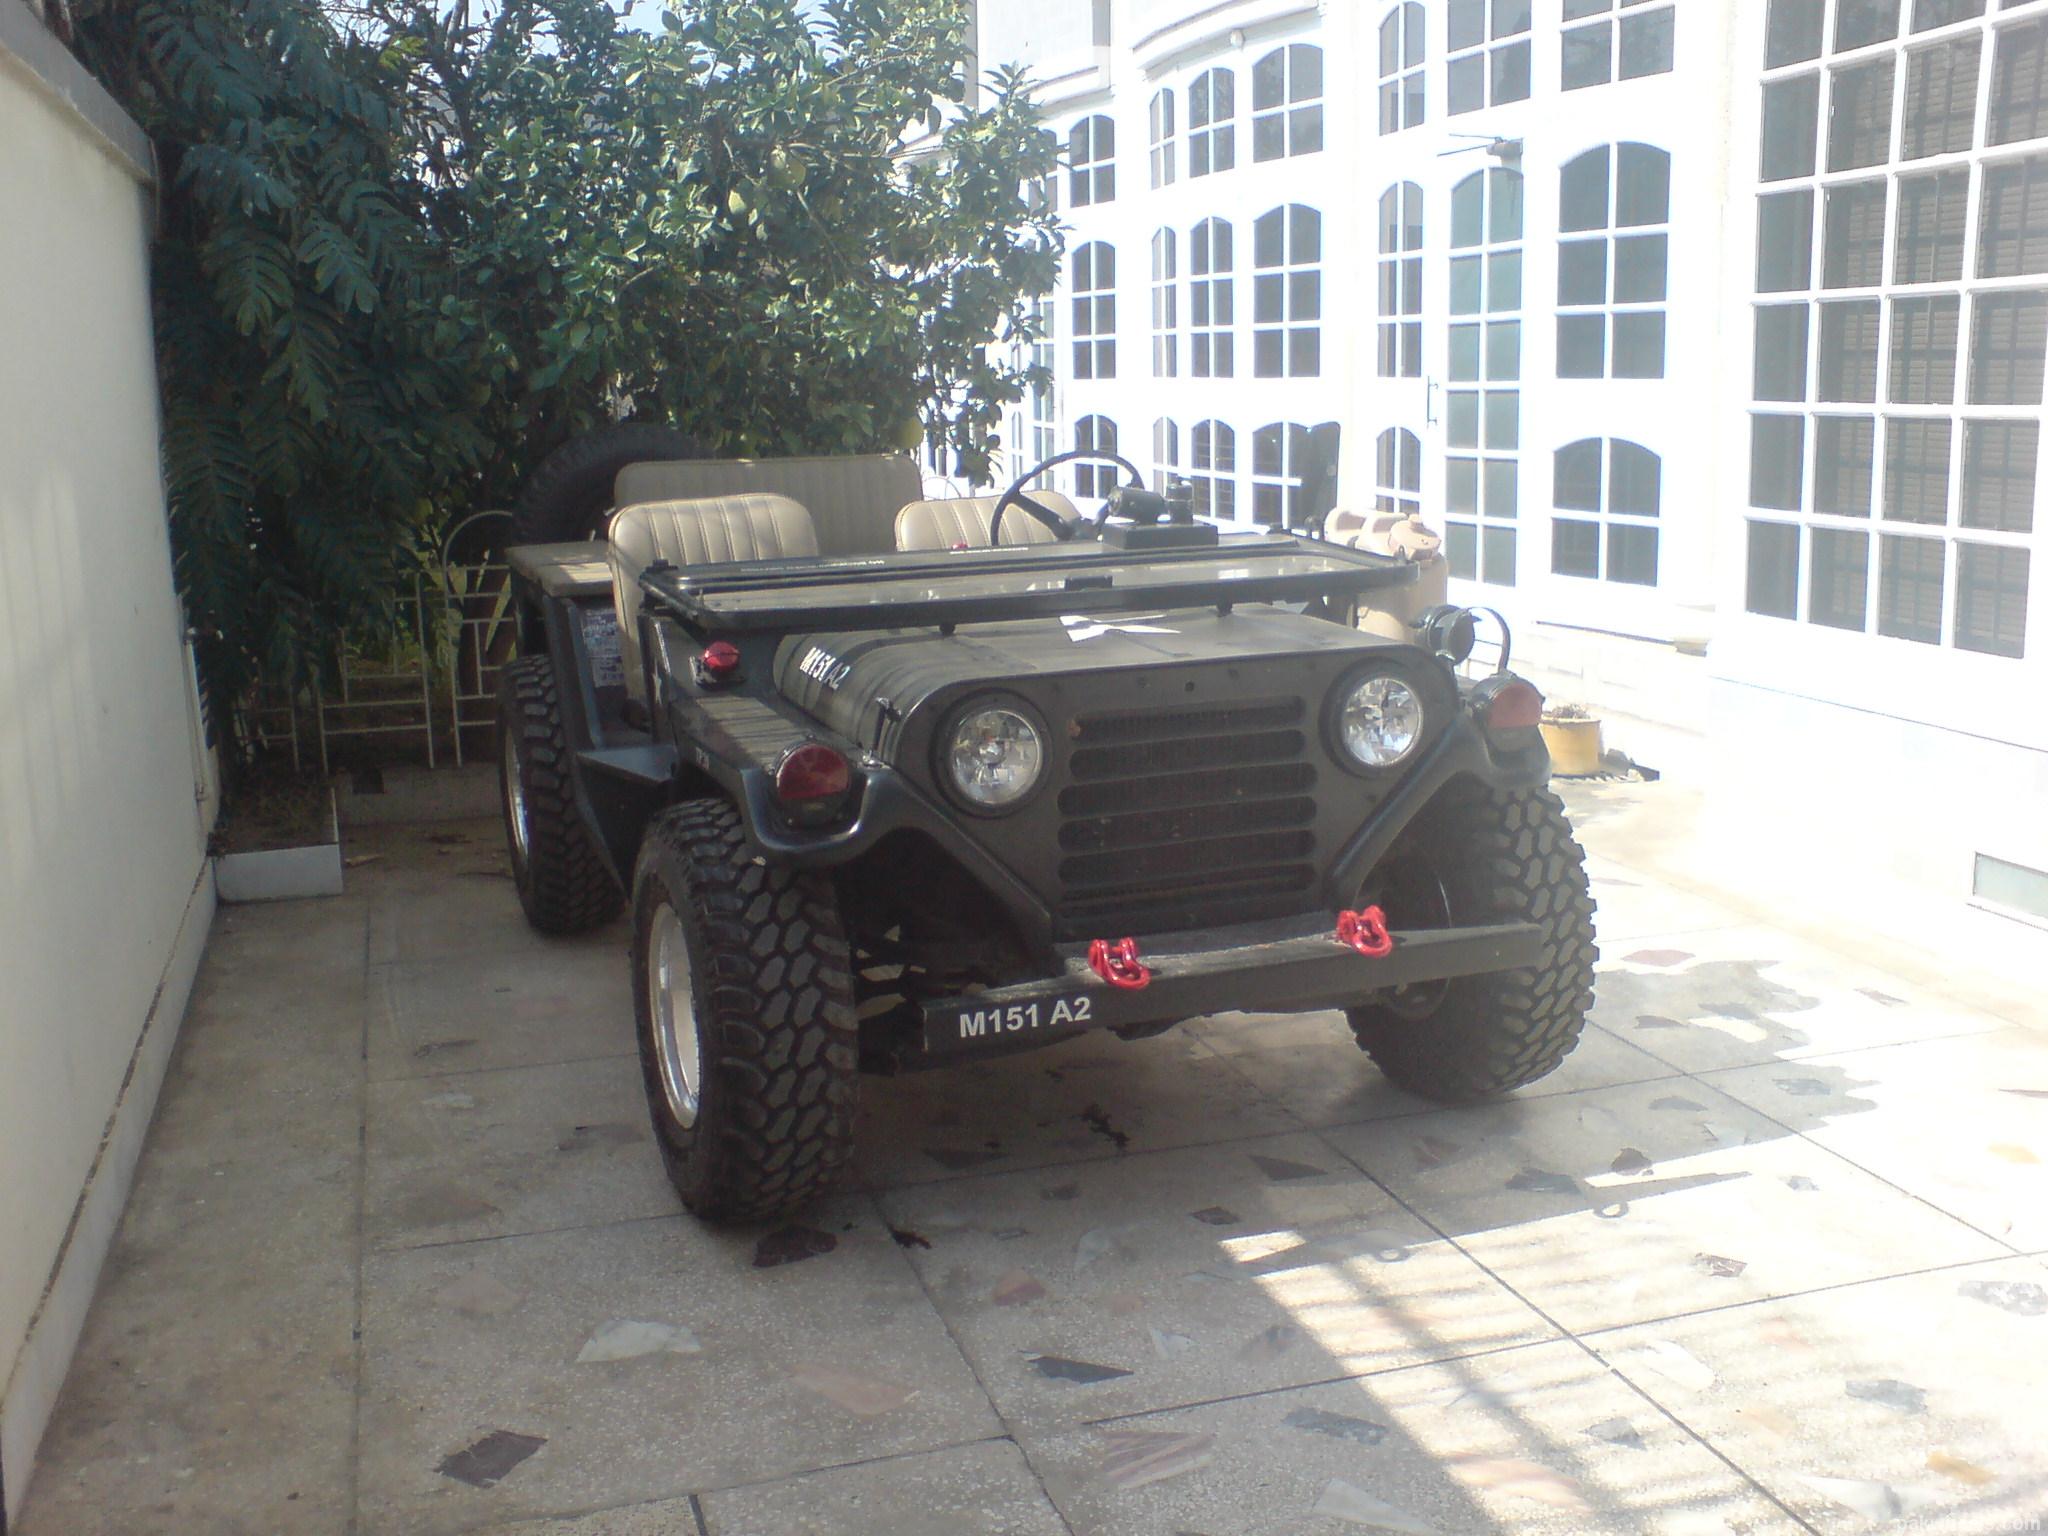 M151 Mutt / Commando jeep club